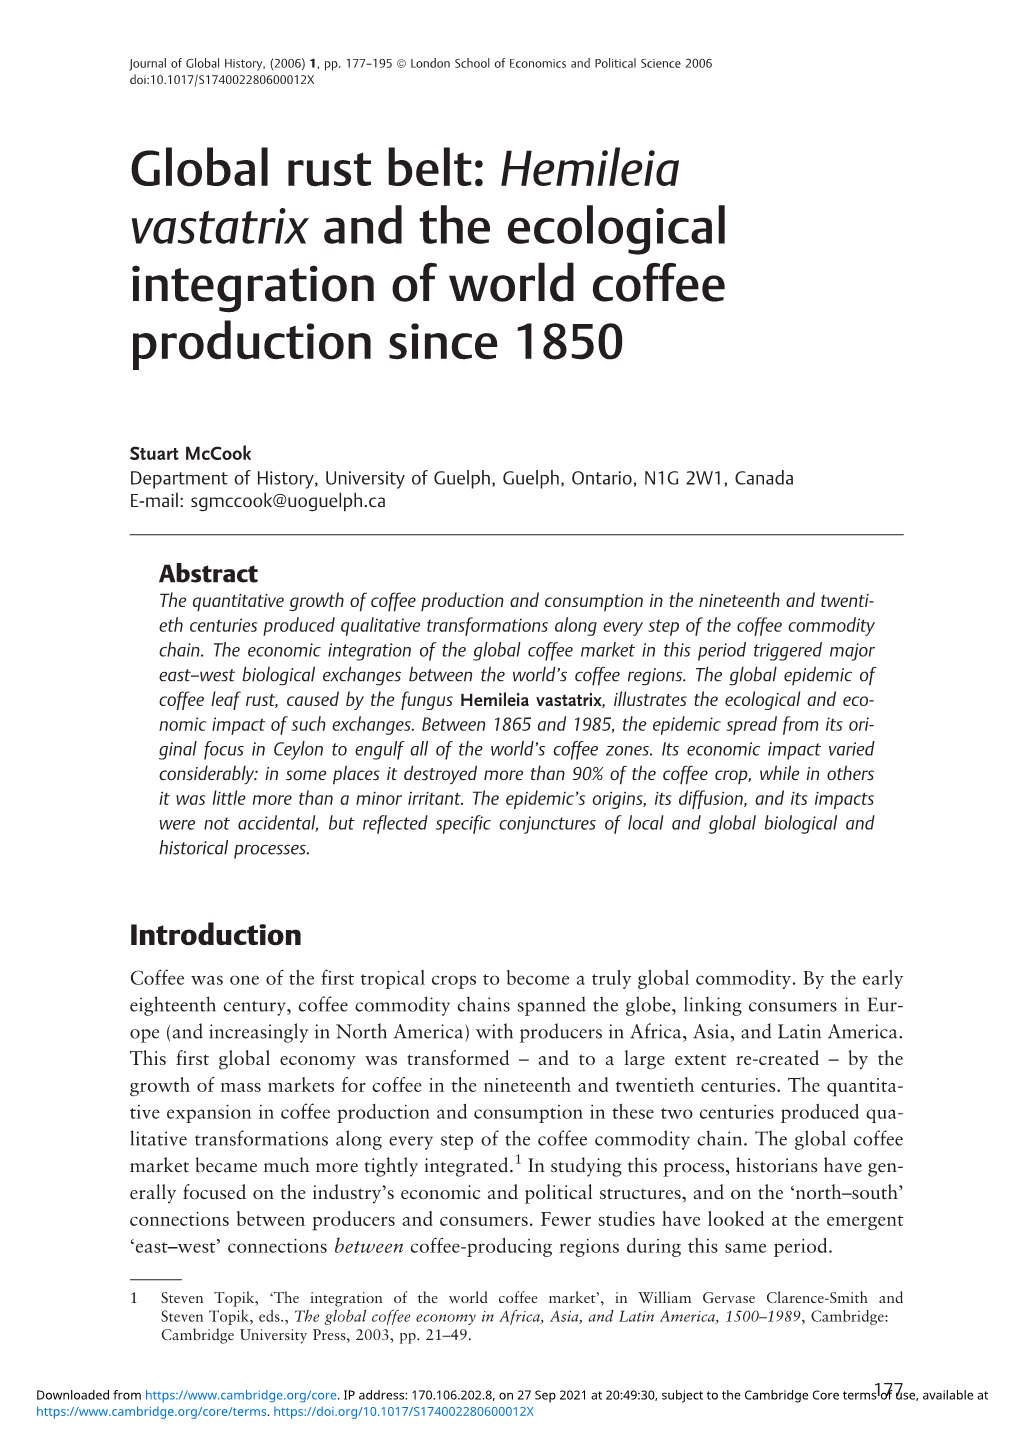 Global Rust Belt: Hemileia Vastatrix and the Ecological Integration of World Coffee Production Since 1850